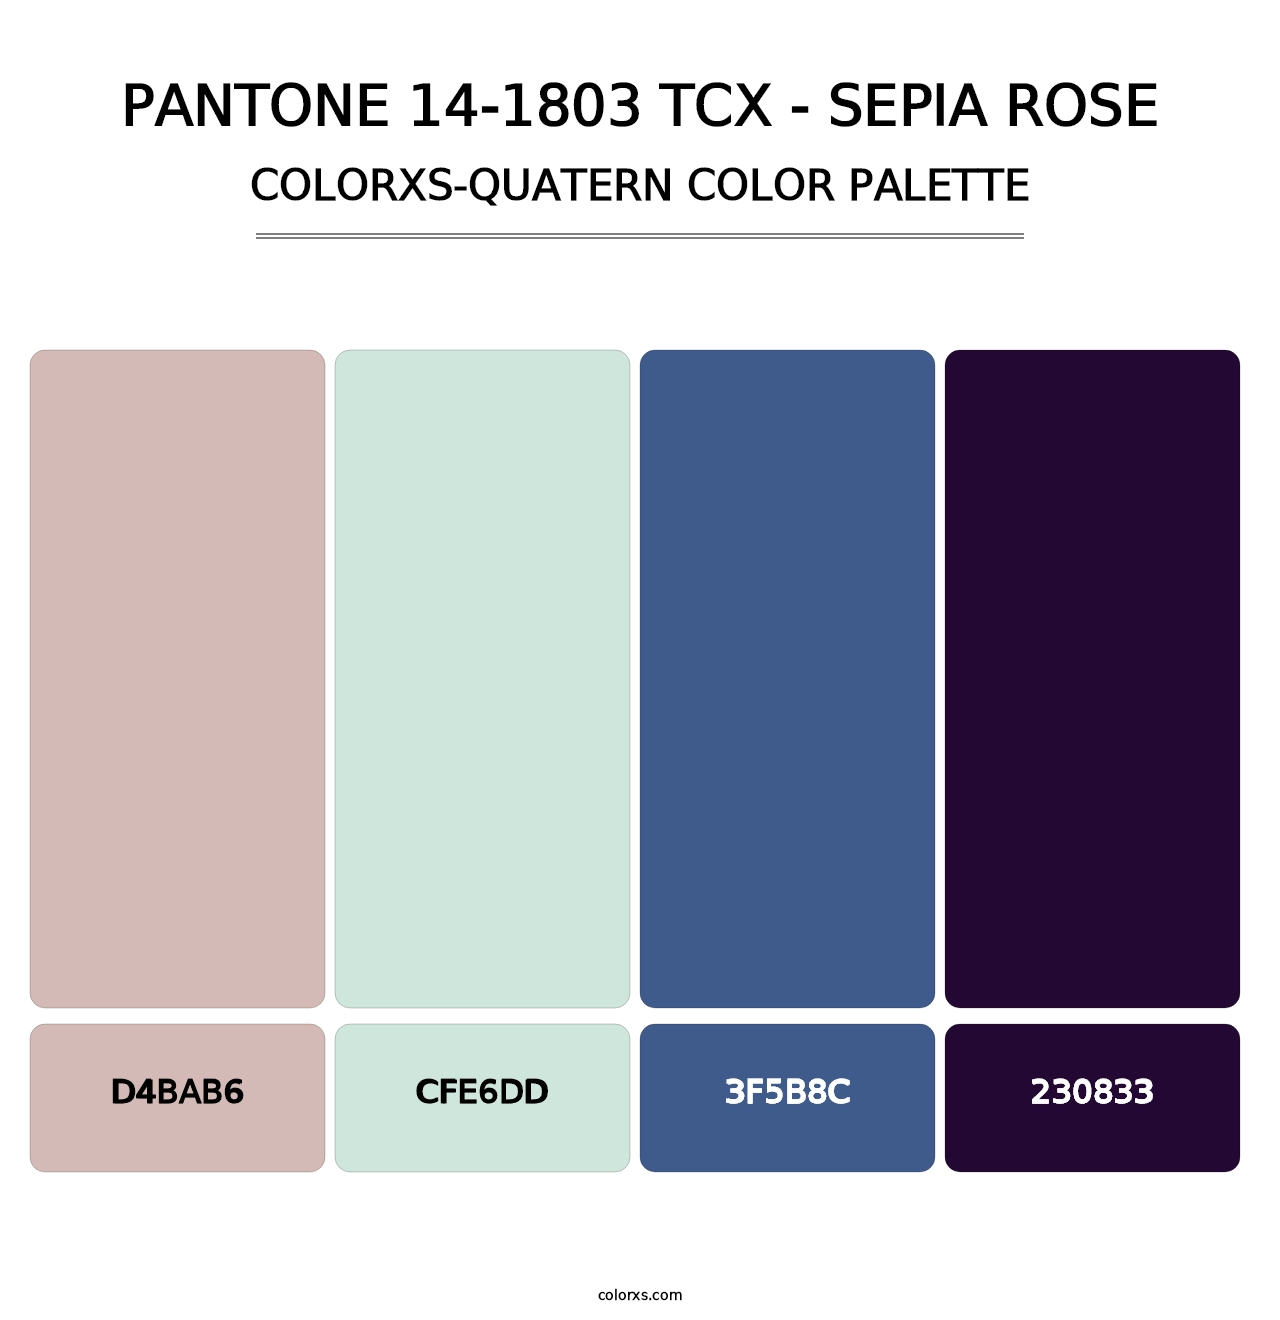 PANTONE 14-1803 TCX - Sepia Rose - Colorxs Quatern Palette